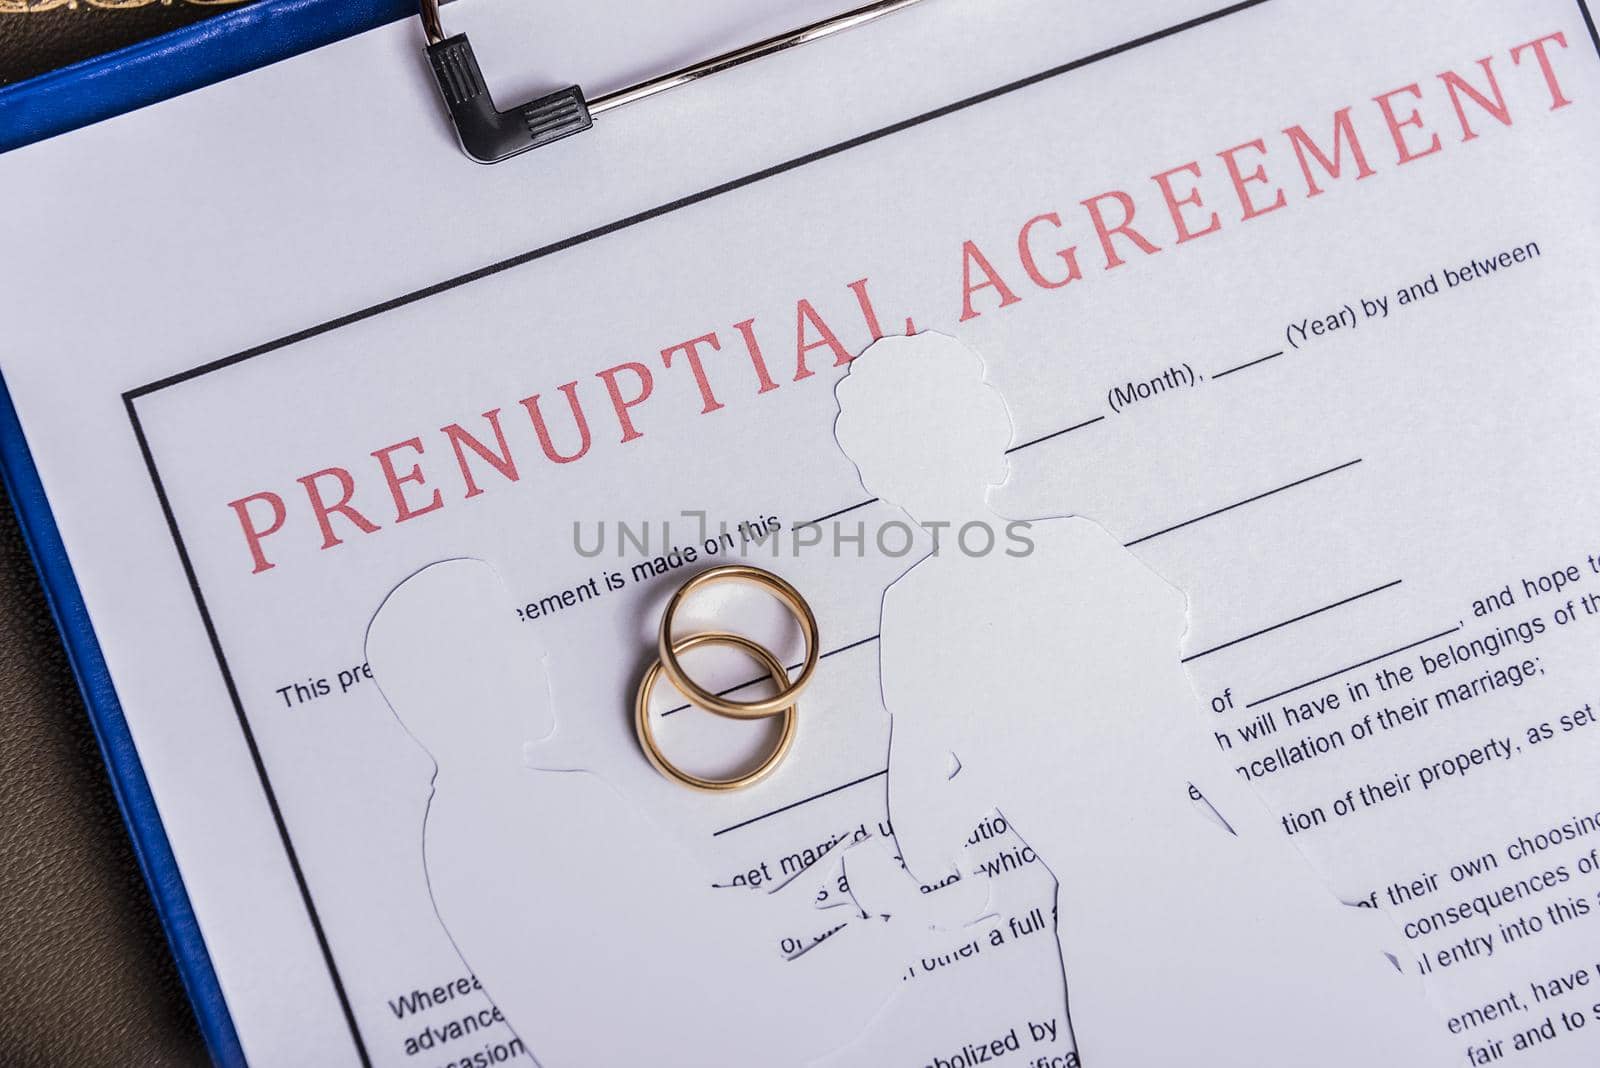 Prenuptial agreement. Family law, drafting of prenuptial agreement. by jbruiz78